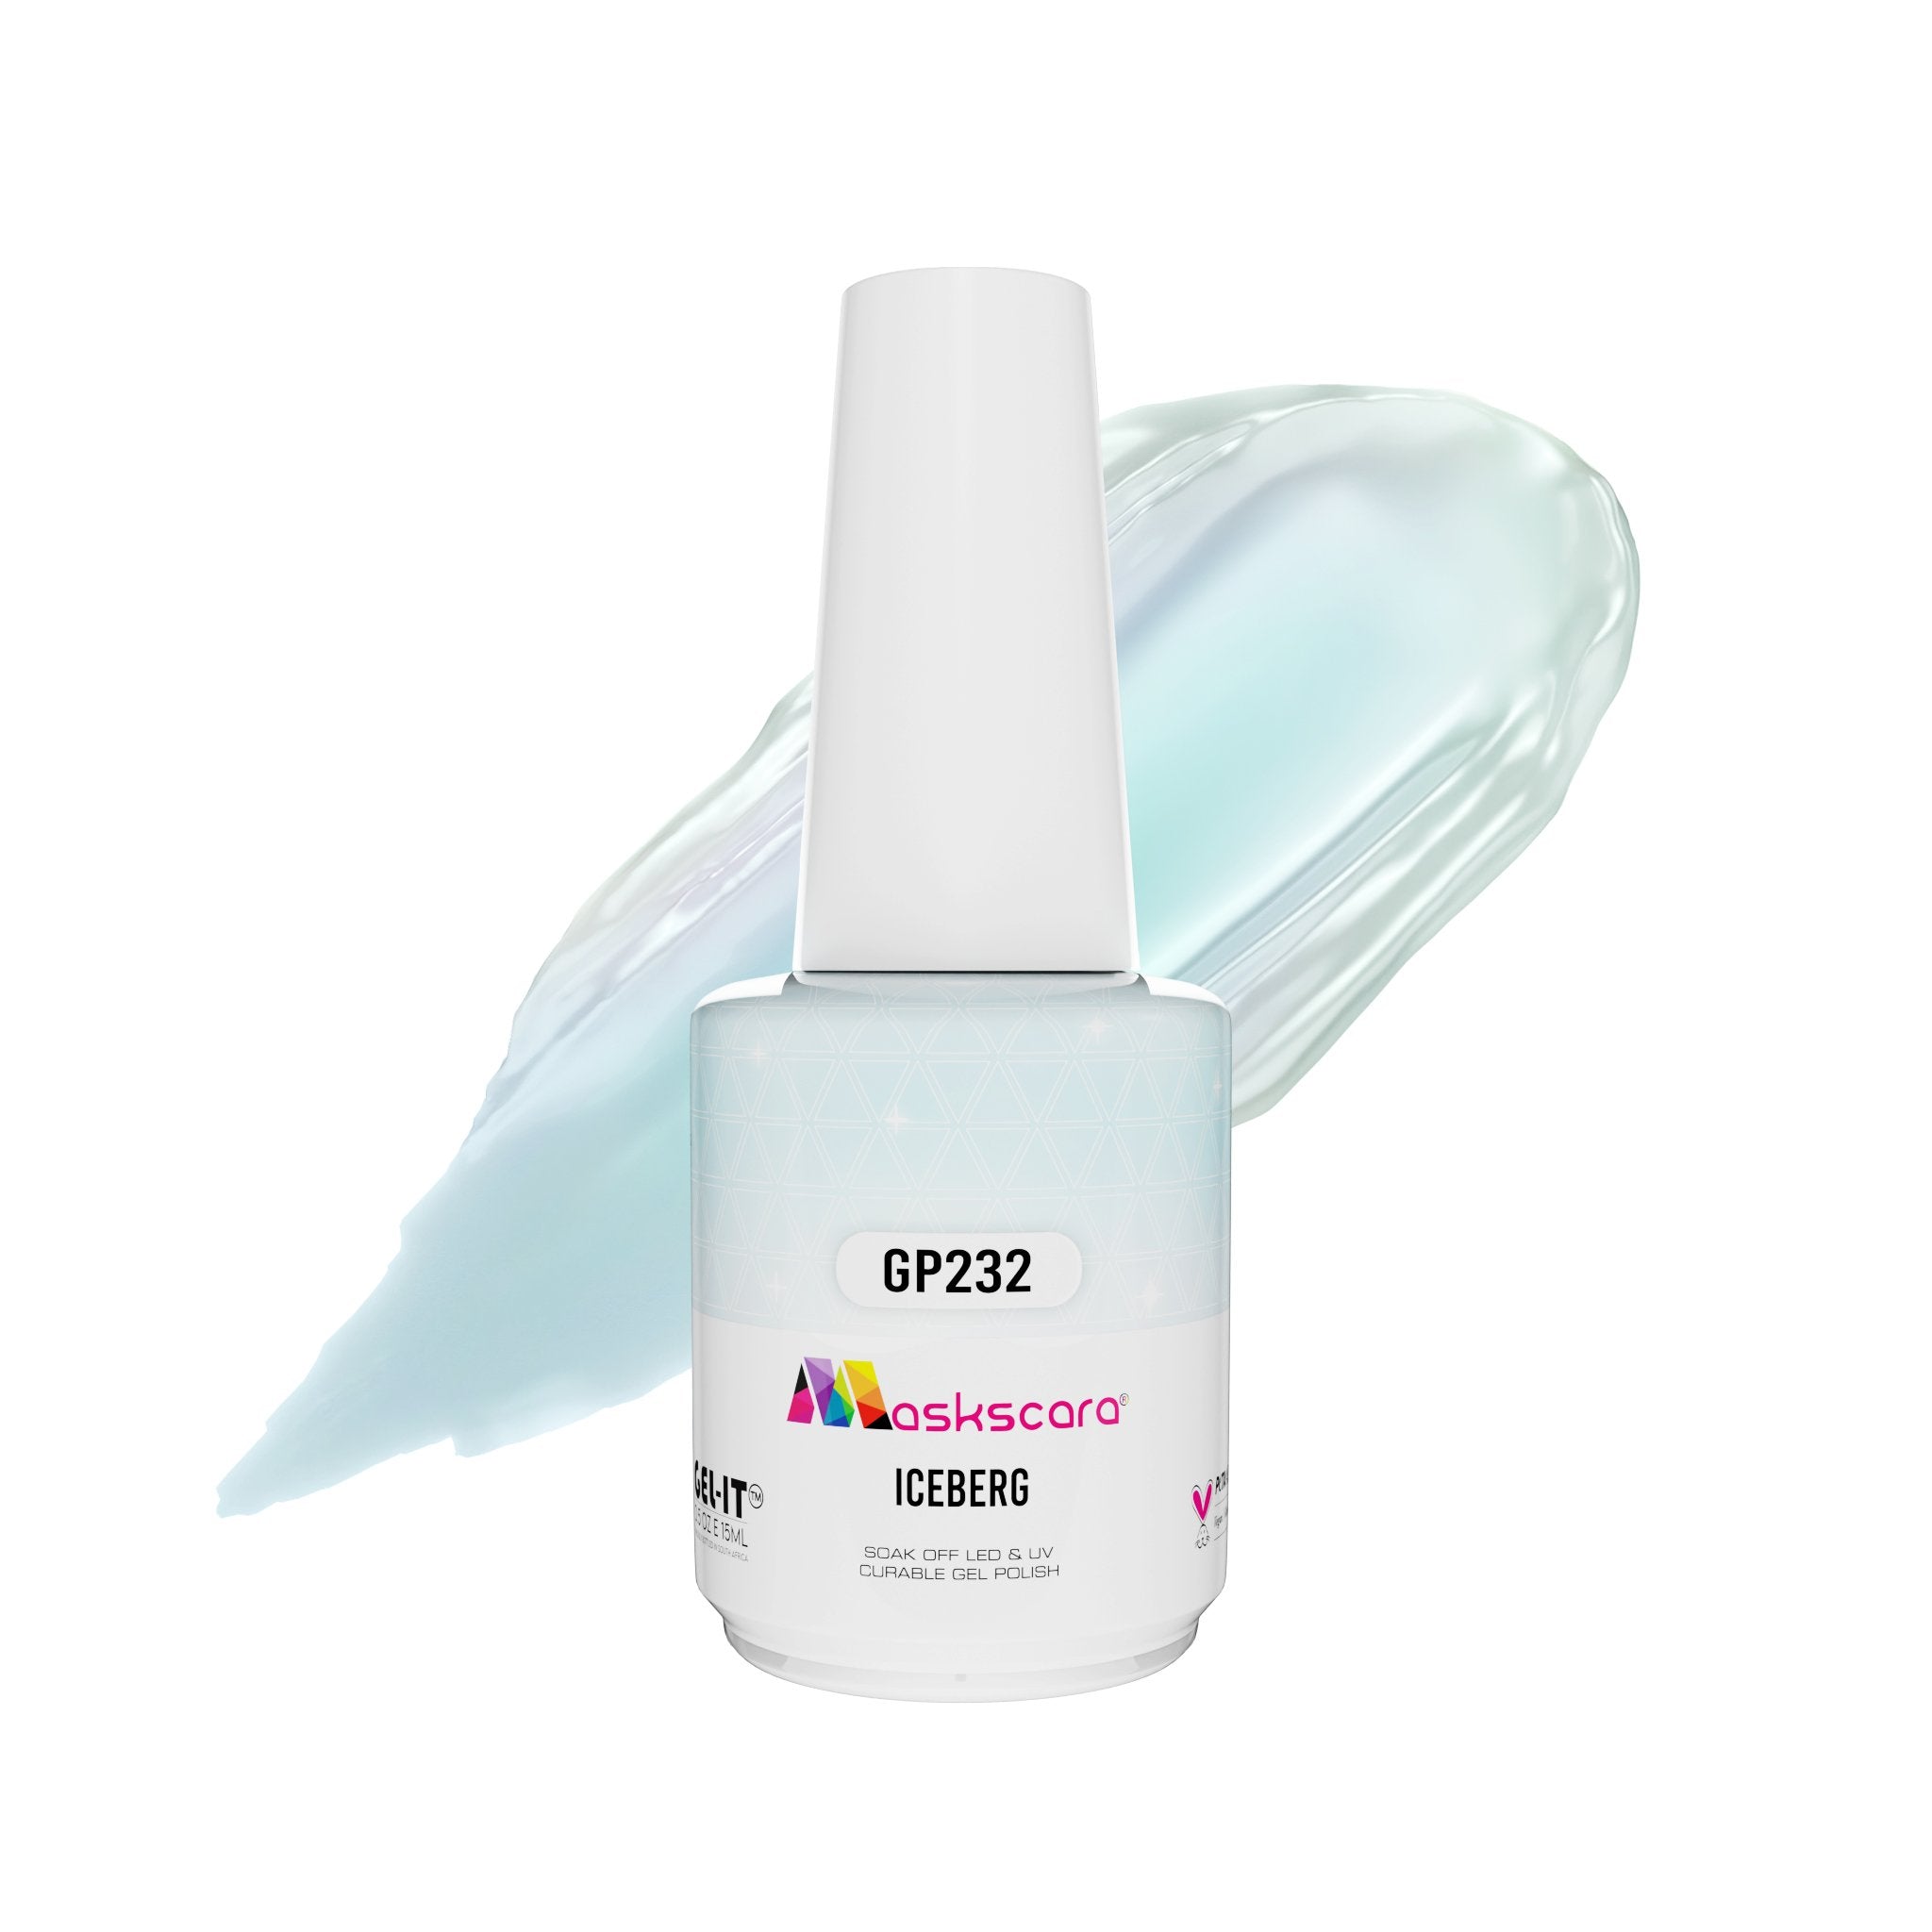 <img scr = “ GP232 Iceberg.jpeg” alt = “Pearlescent White gel polish colour by the brand Maskscara”>